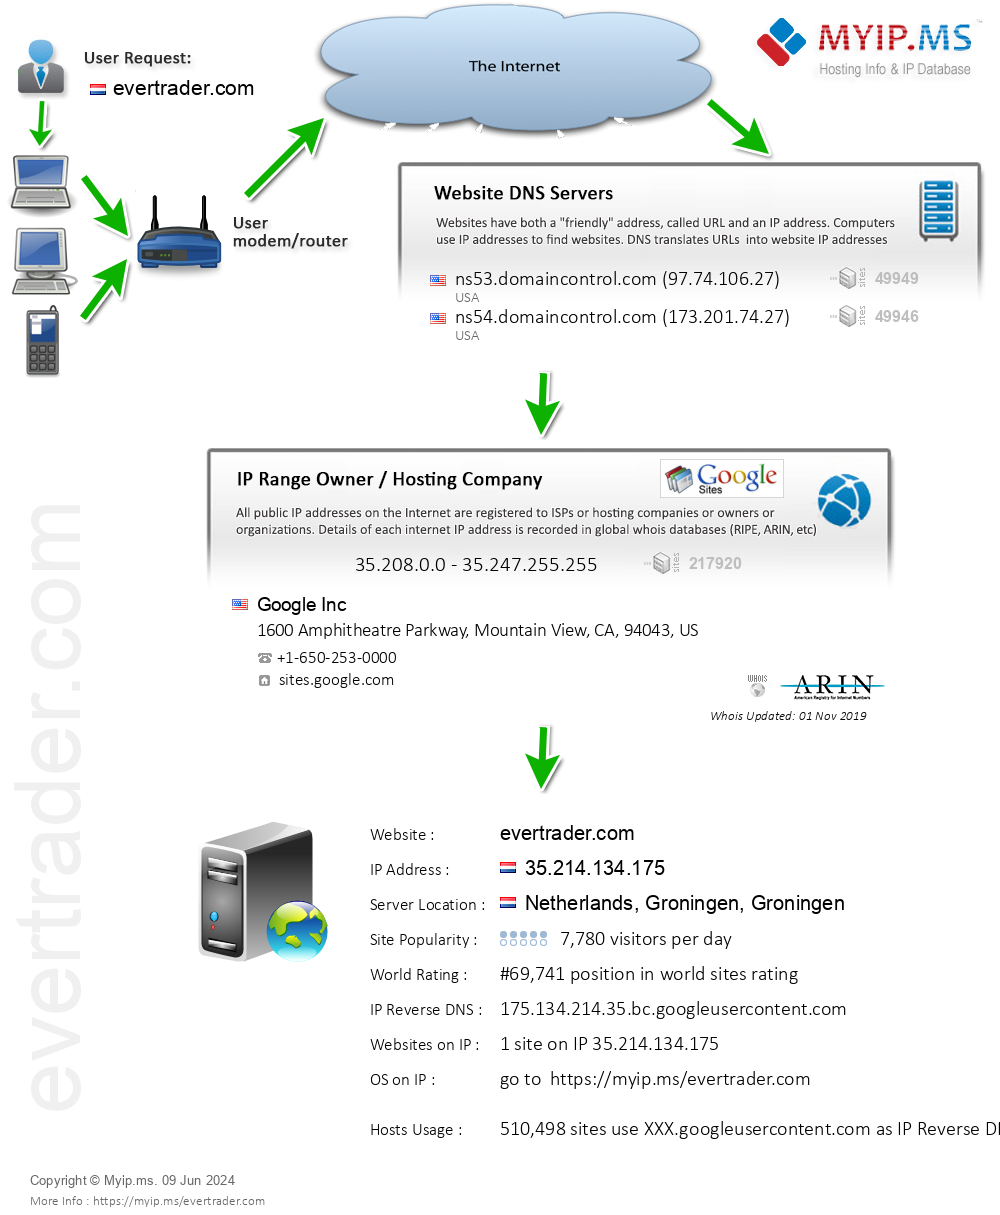 Evertrader.com - Website Hosting Visual IP Diagram